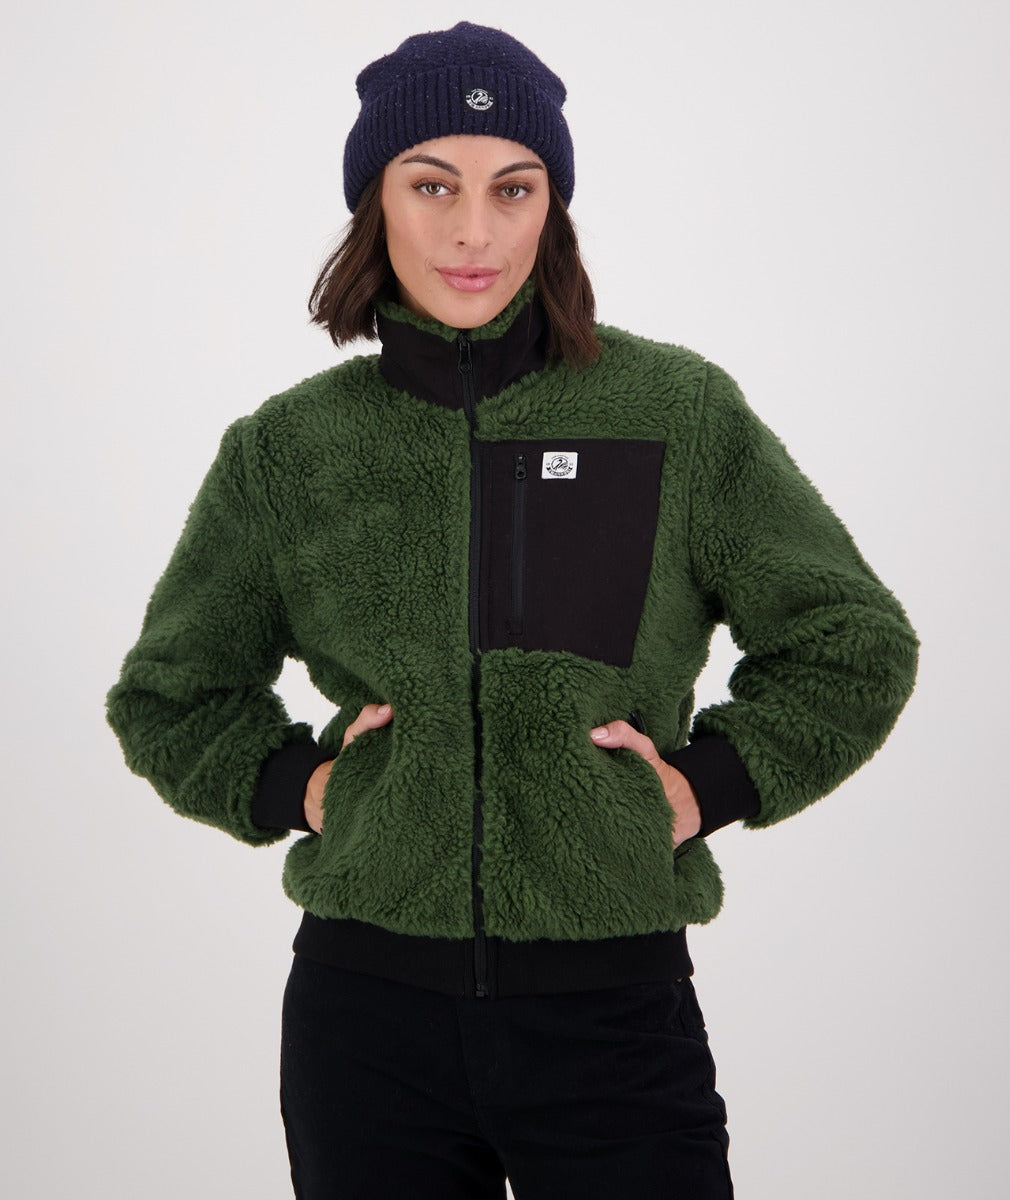 Newgale v2 Wool Fleece Jacket